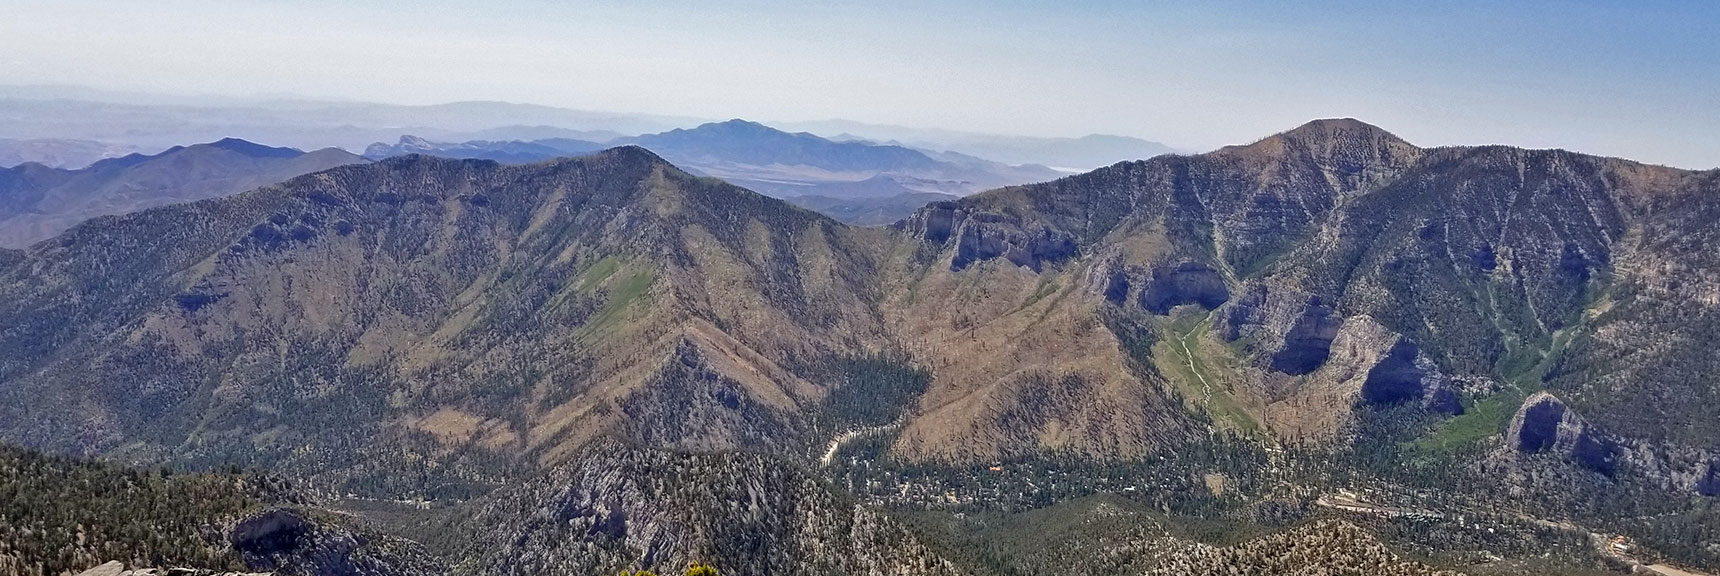 Harris Mt., Griffith Peak and Lovell Canyon Viewed from Mummy's Toe Summit | Mummy Mountain's Toe, Mt. Charleston Wilderness, Nevada